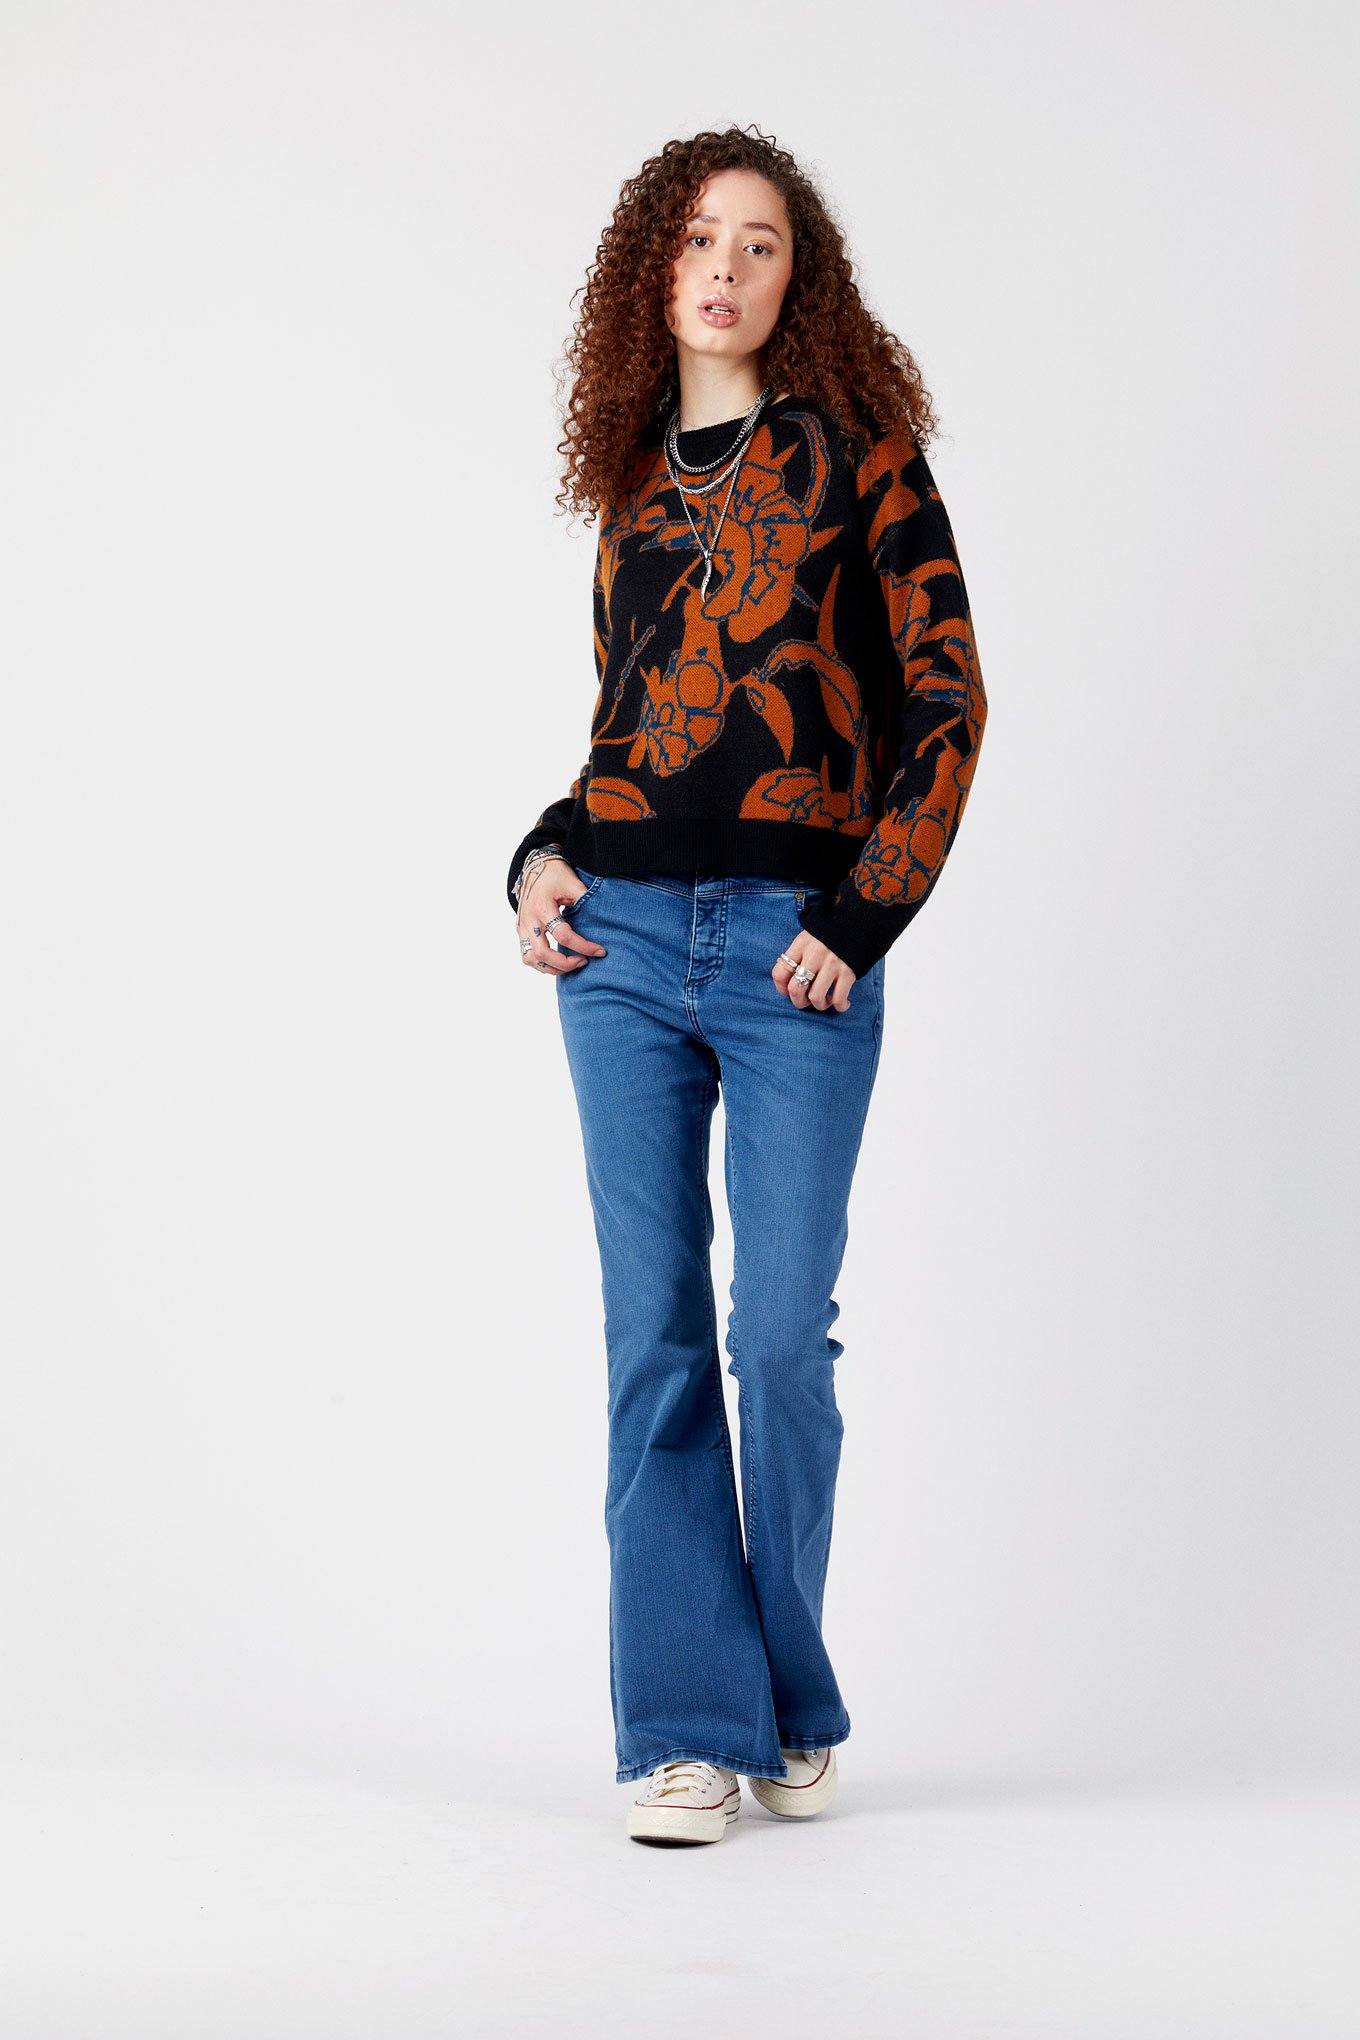 MAVIS Azure - GOTS Organic Cotton Jeans by Flax & Loom, 27 / Regular